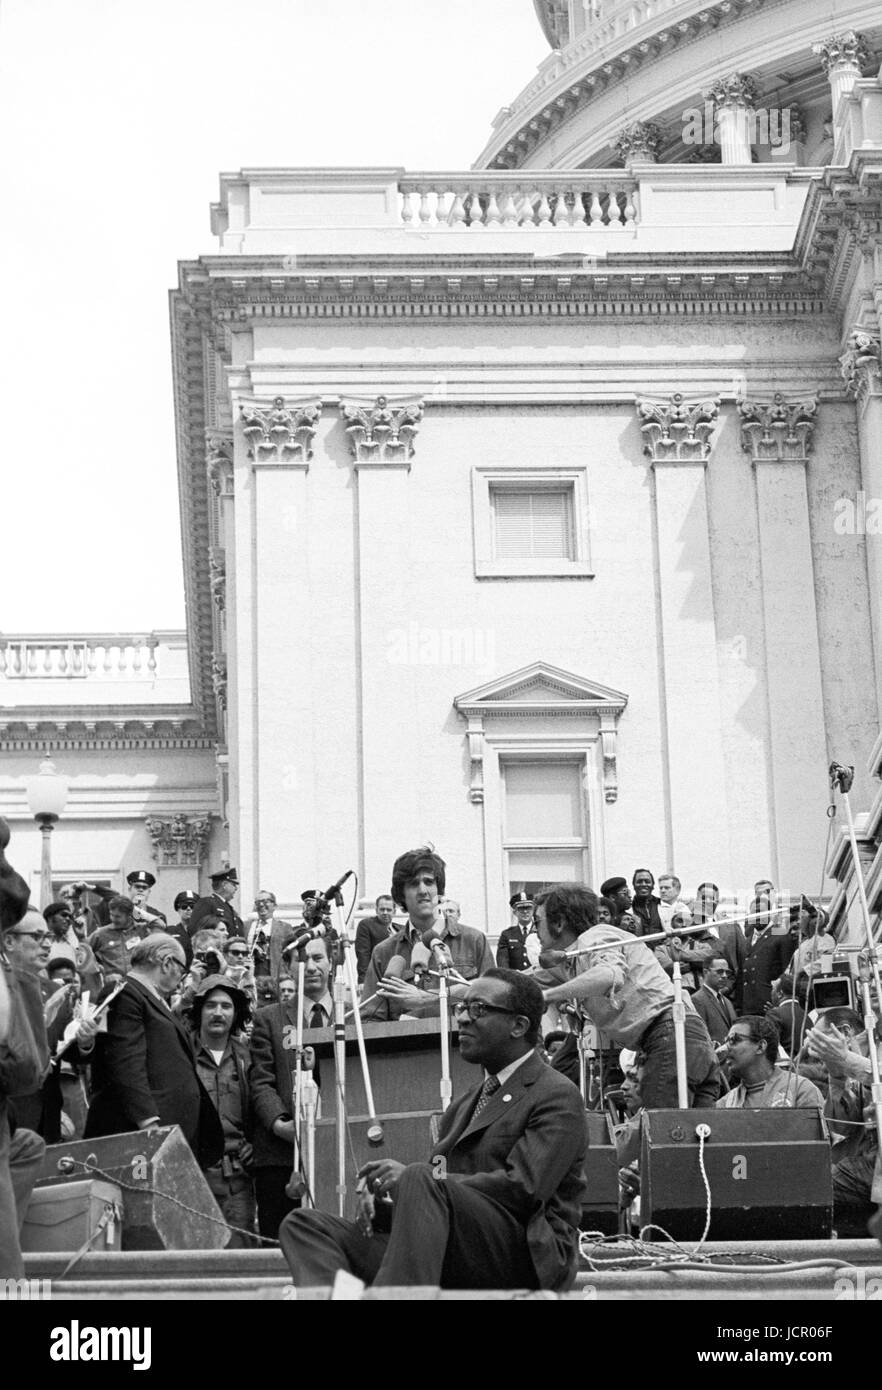 On April 22, 1971, Vietnam veteran Lt. John Kerry at the 1971 Mayday antiwar demonstration at the US Capitol. Stock Photo